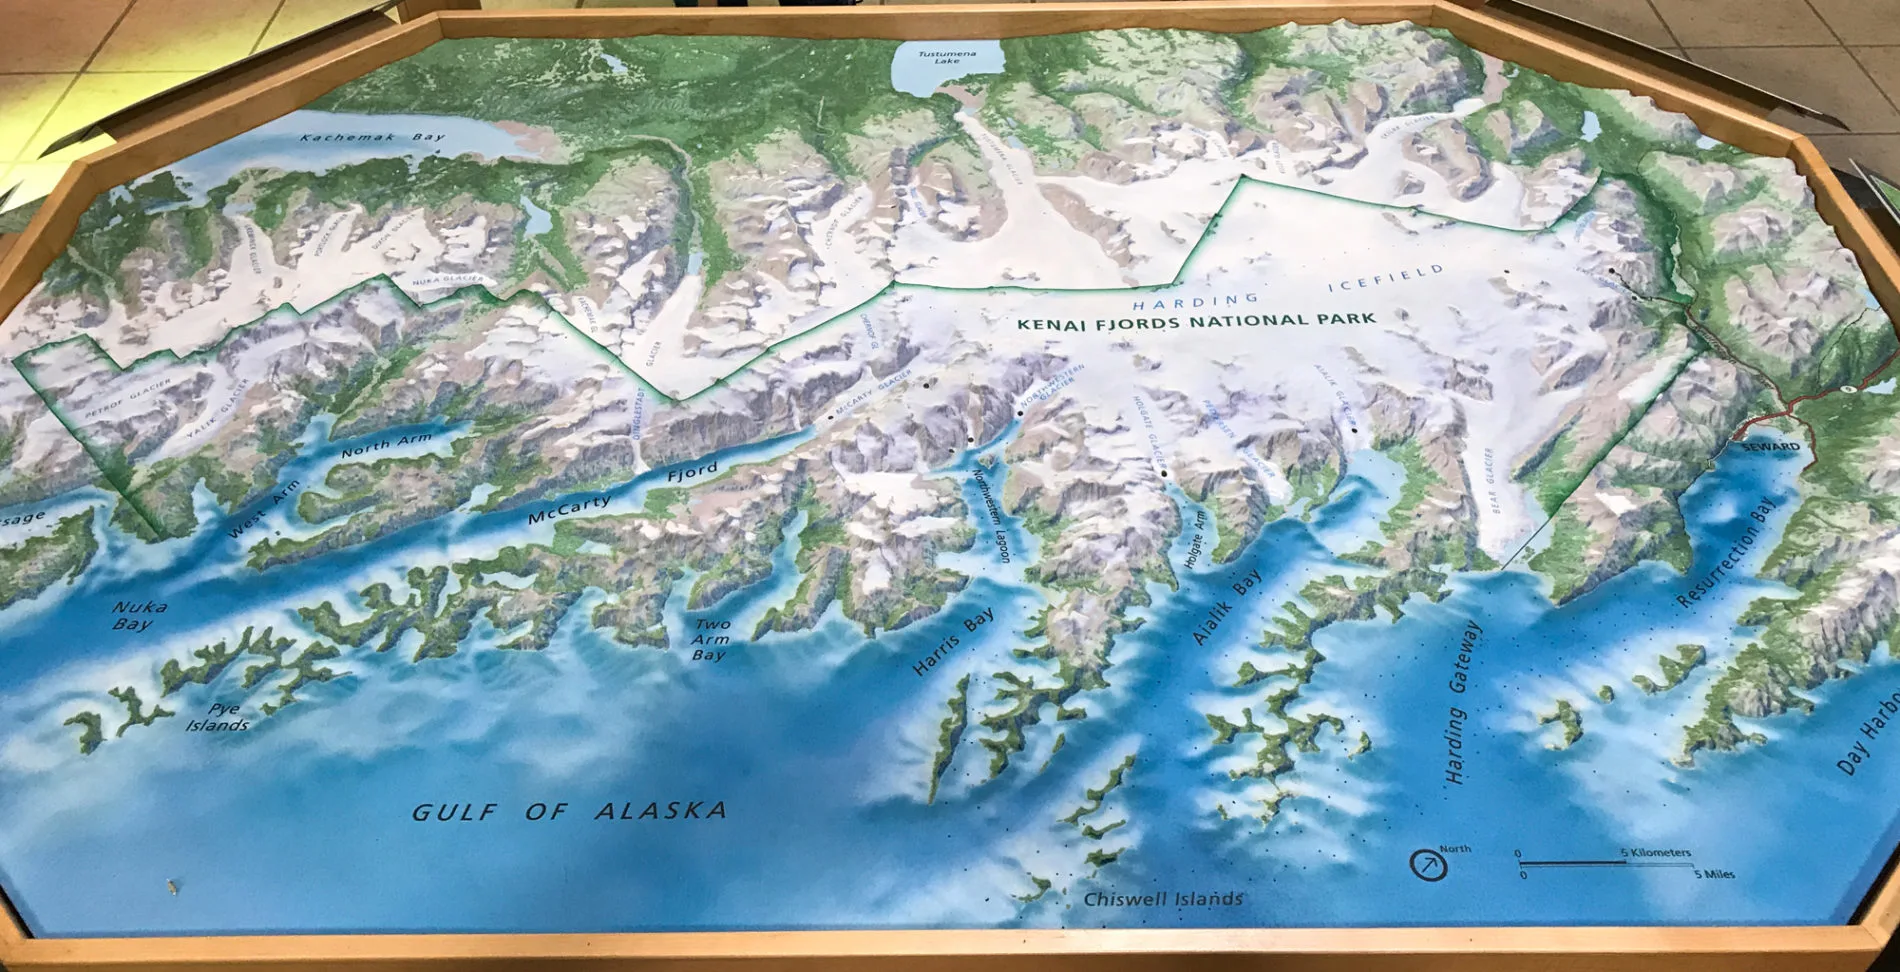 Kenai Fjords National Park and Harding ice field.